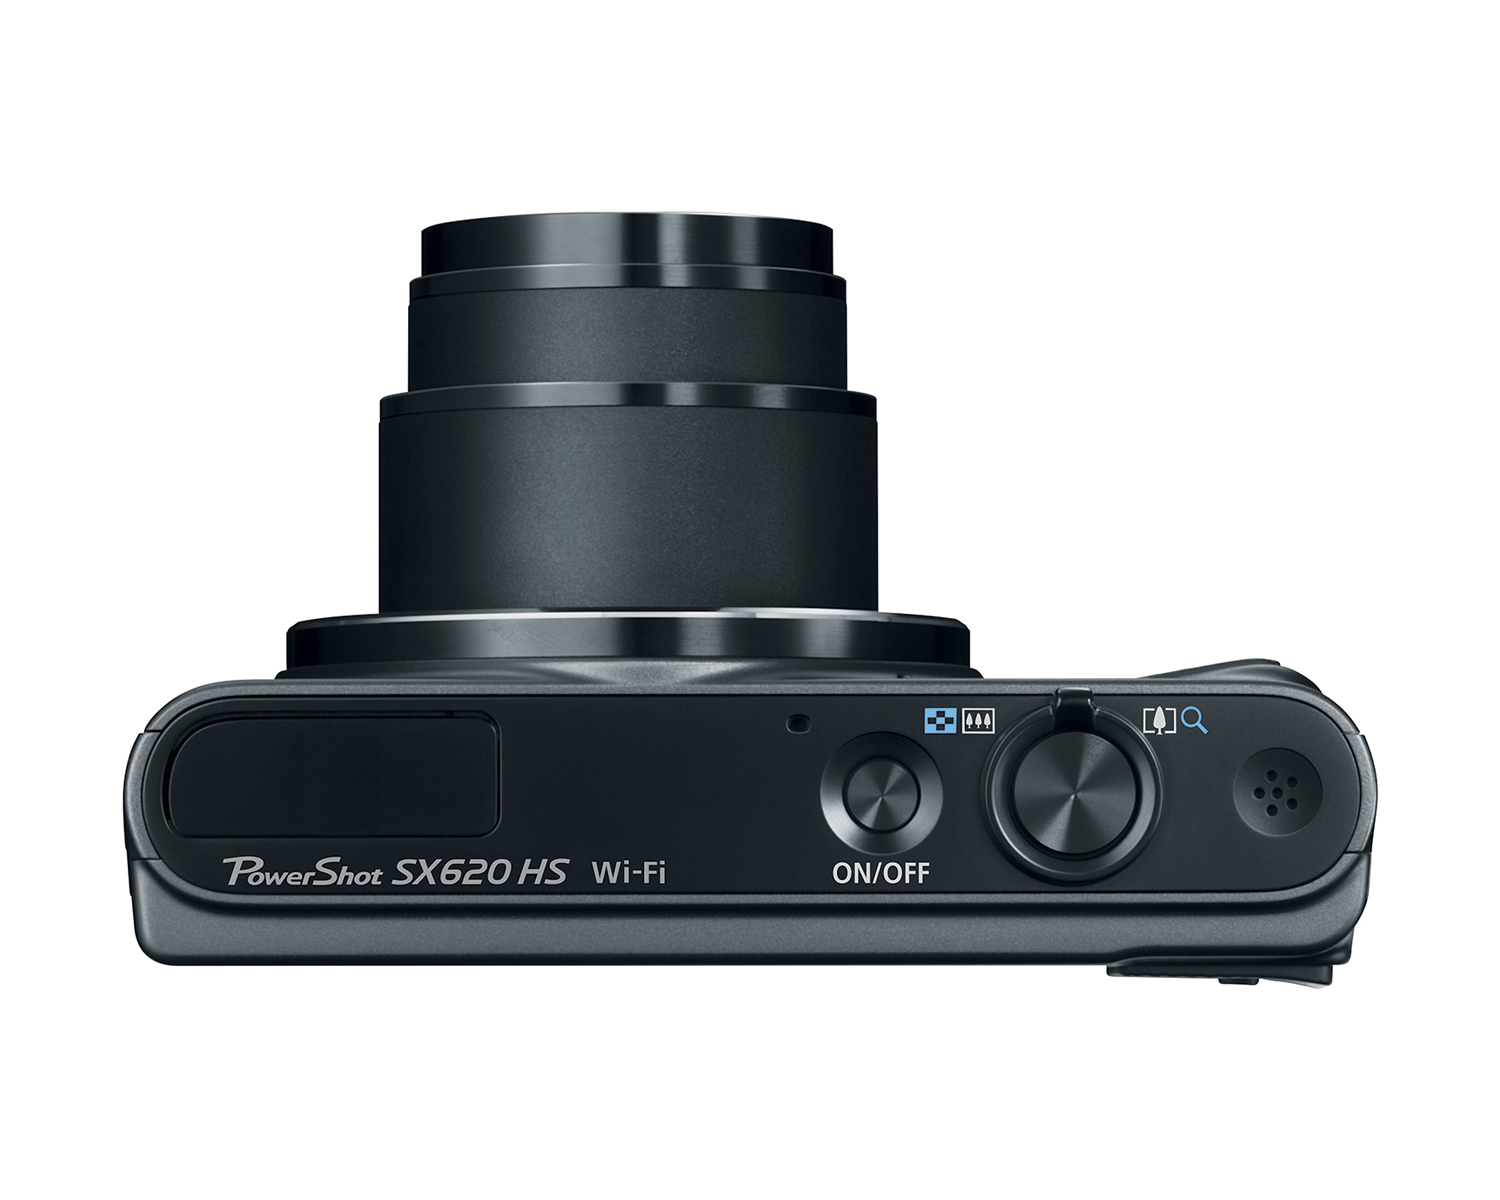 Canon PowerShot SX620 HS compact camera announced